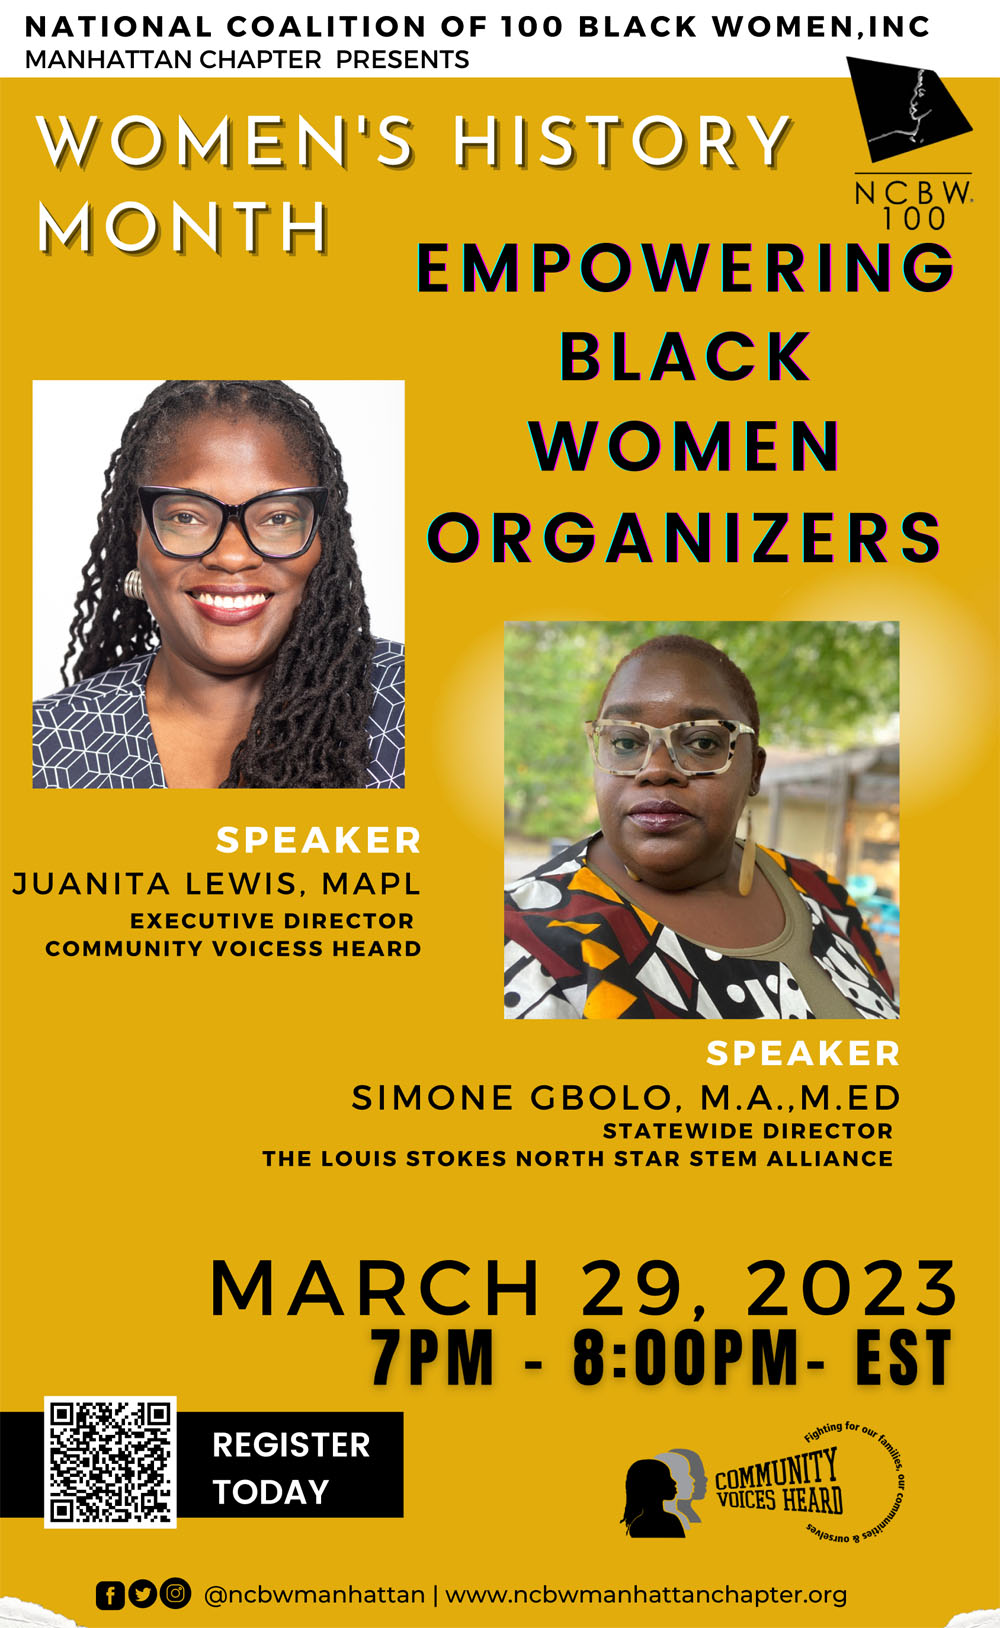 NCBW 100 - Manhattan NY Chapter | National Coalition of 100 Black Women